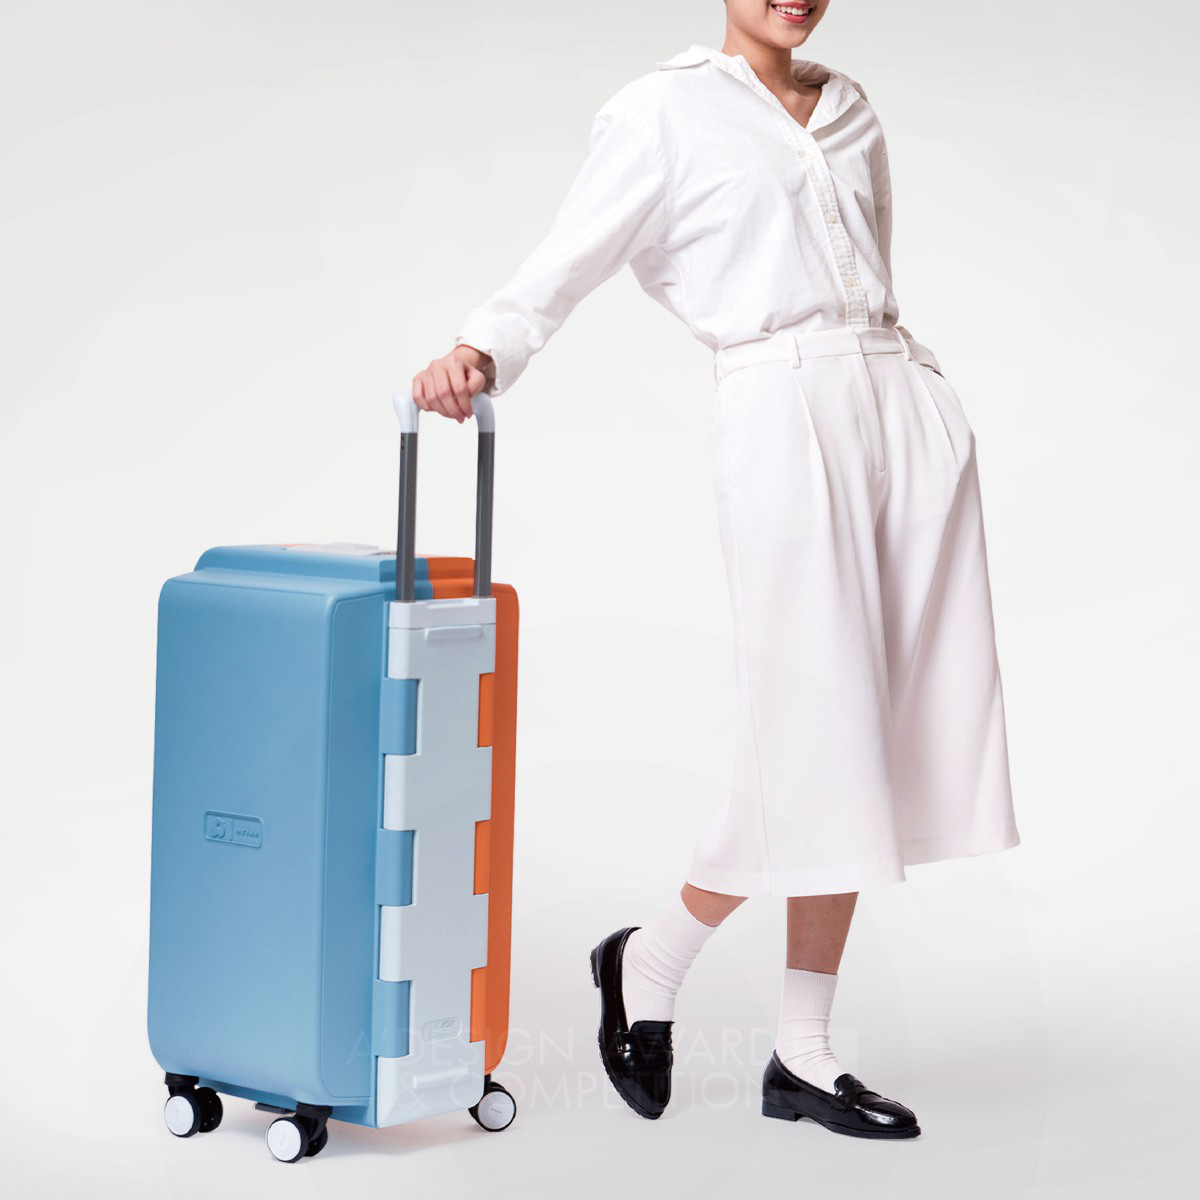 Rhita Sustainability Suitcase by ChungSheng Chen